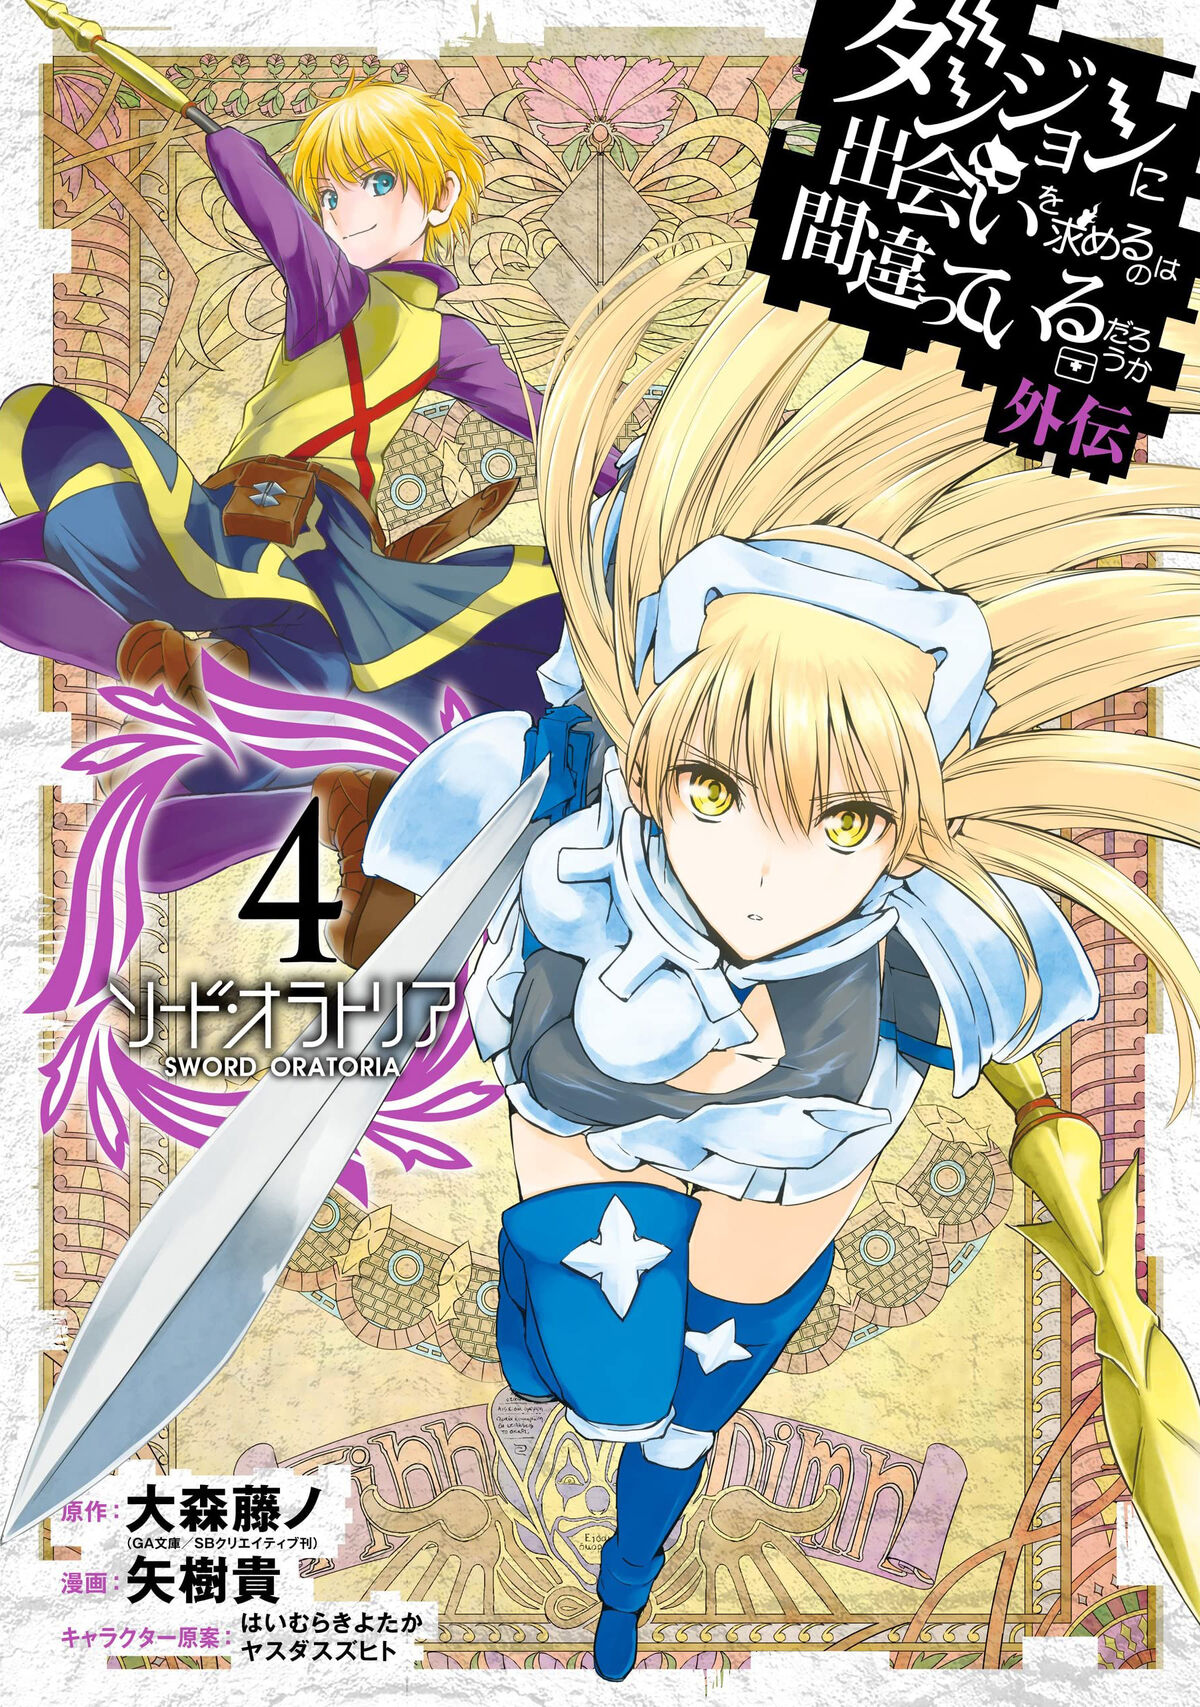 Sword Oratoria Manga Volume 20, DanMachi Wiki